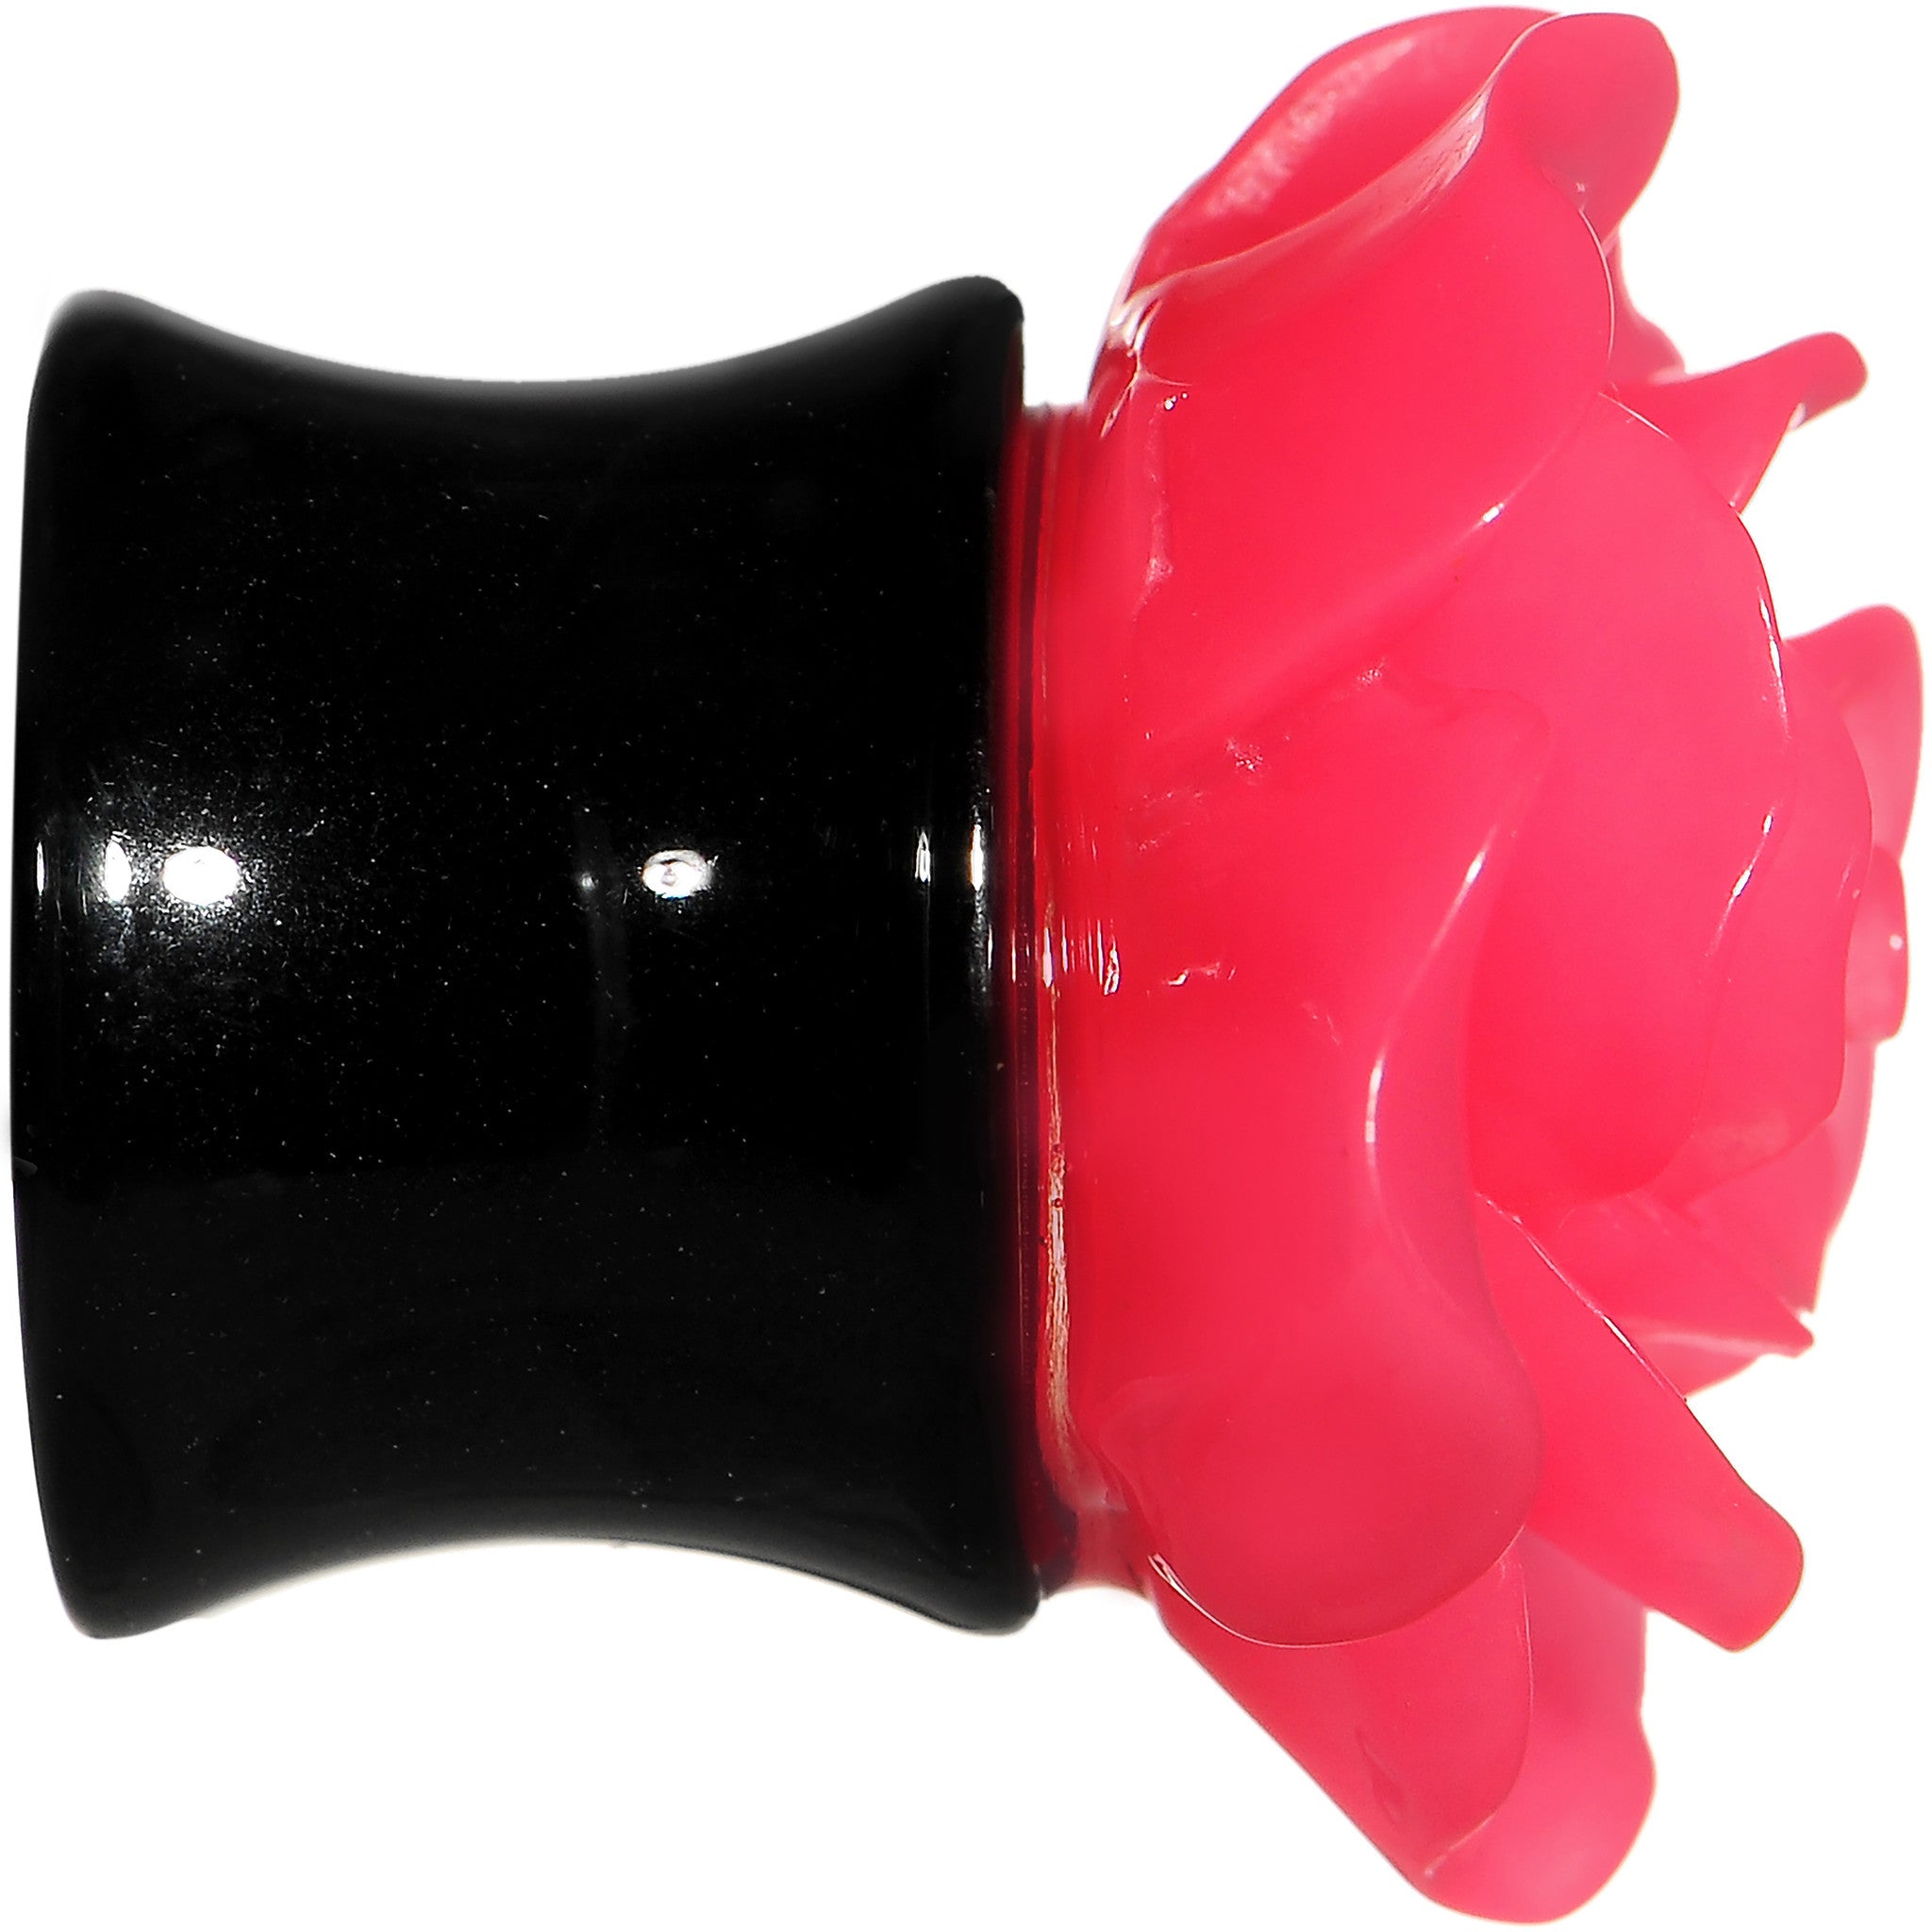 00 Gauge Acrylic Black Neon Pink Rose Flower Saddle Plug Set